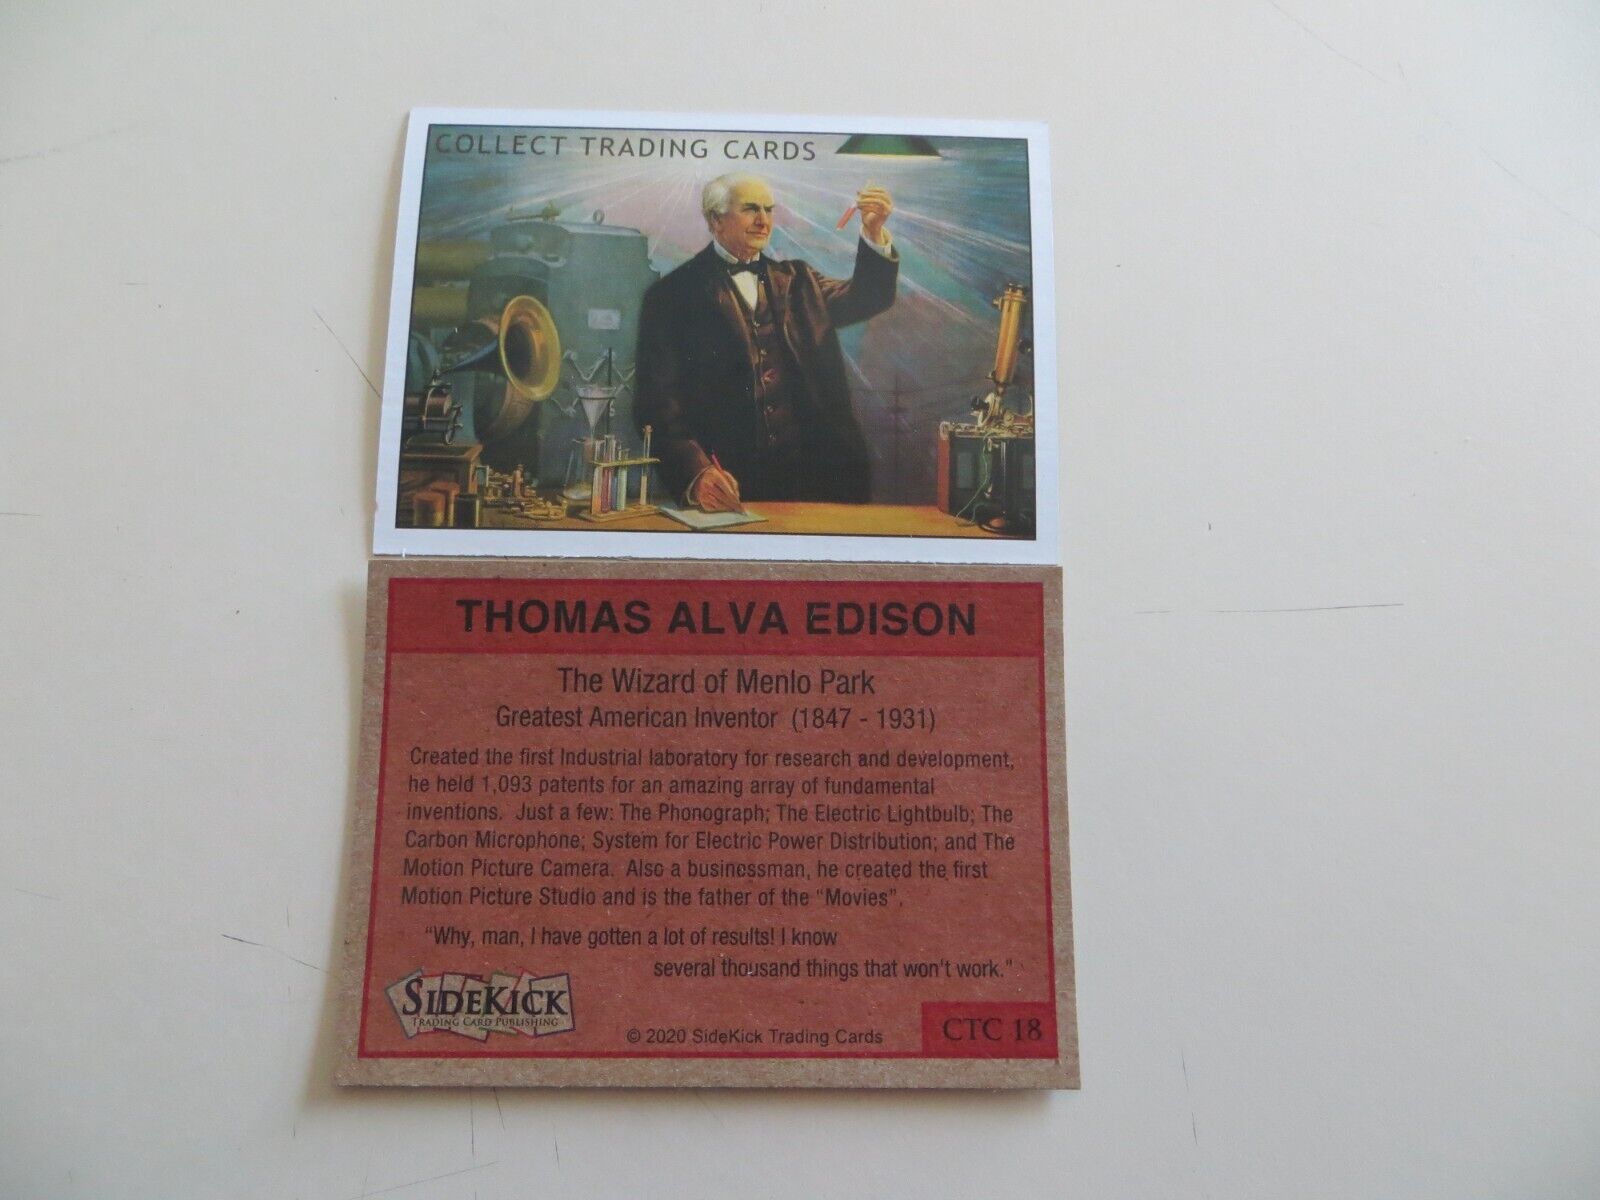 SIDEKICK THOMAS ALVA EDISON PROMO CARD CTC 18 PHILLY NON-SPORT SHOW